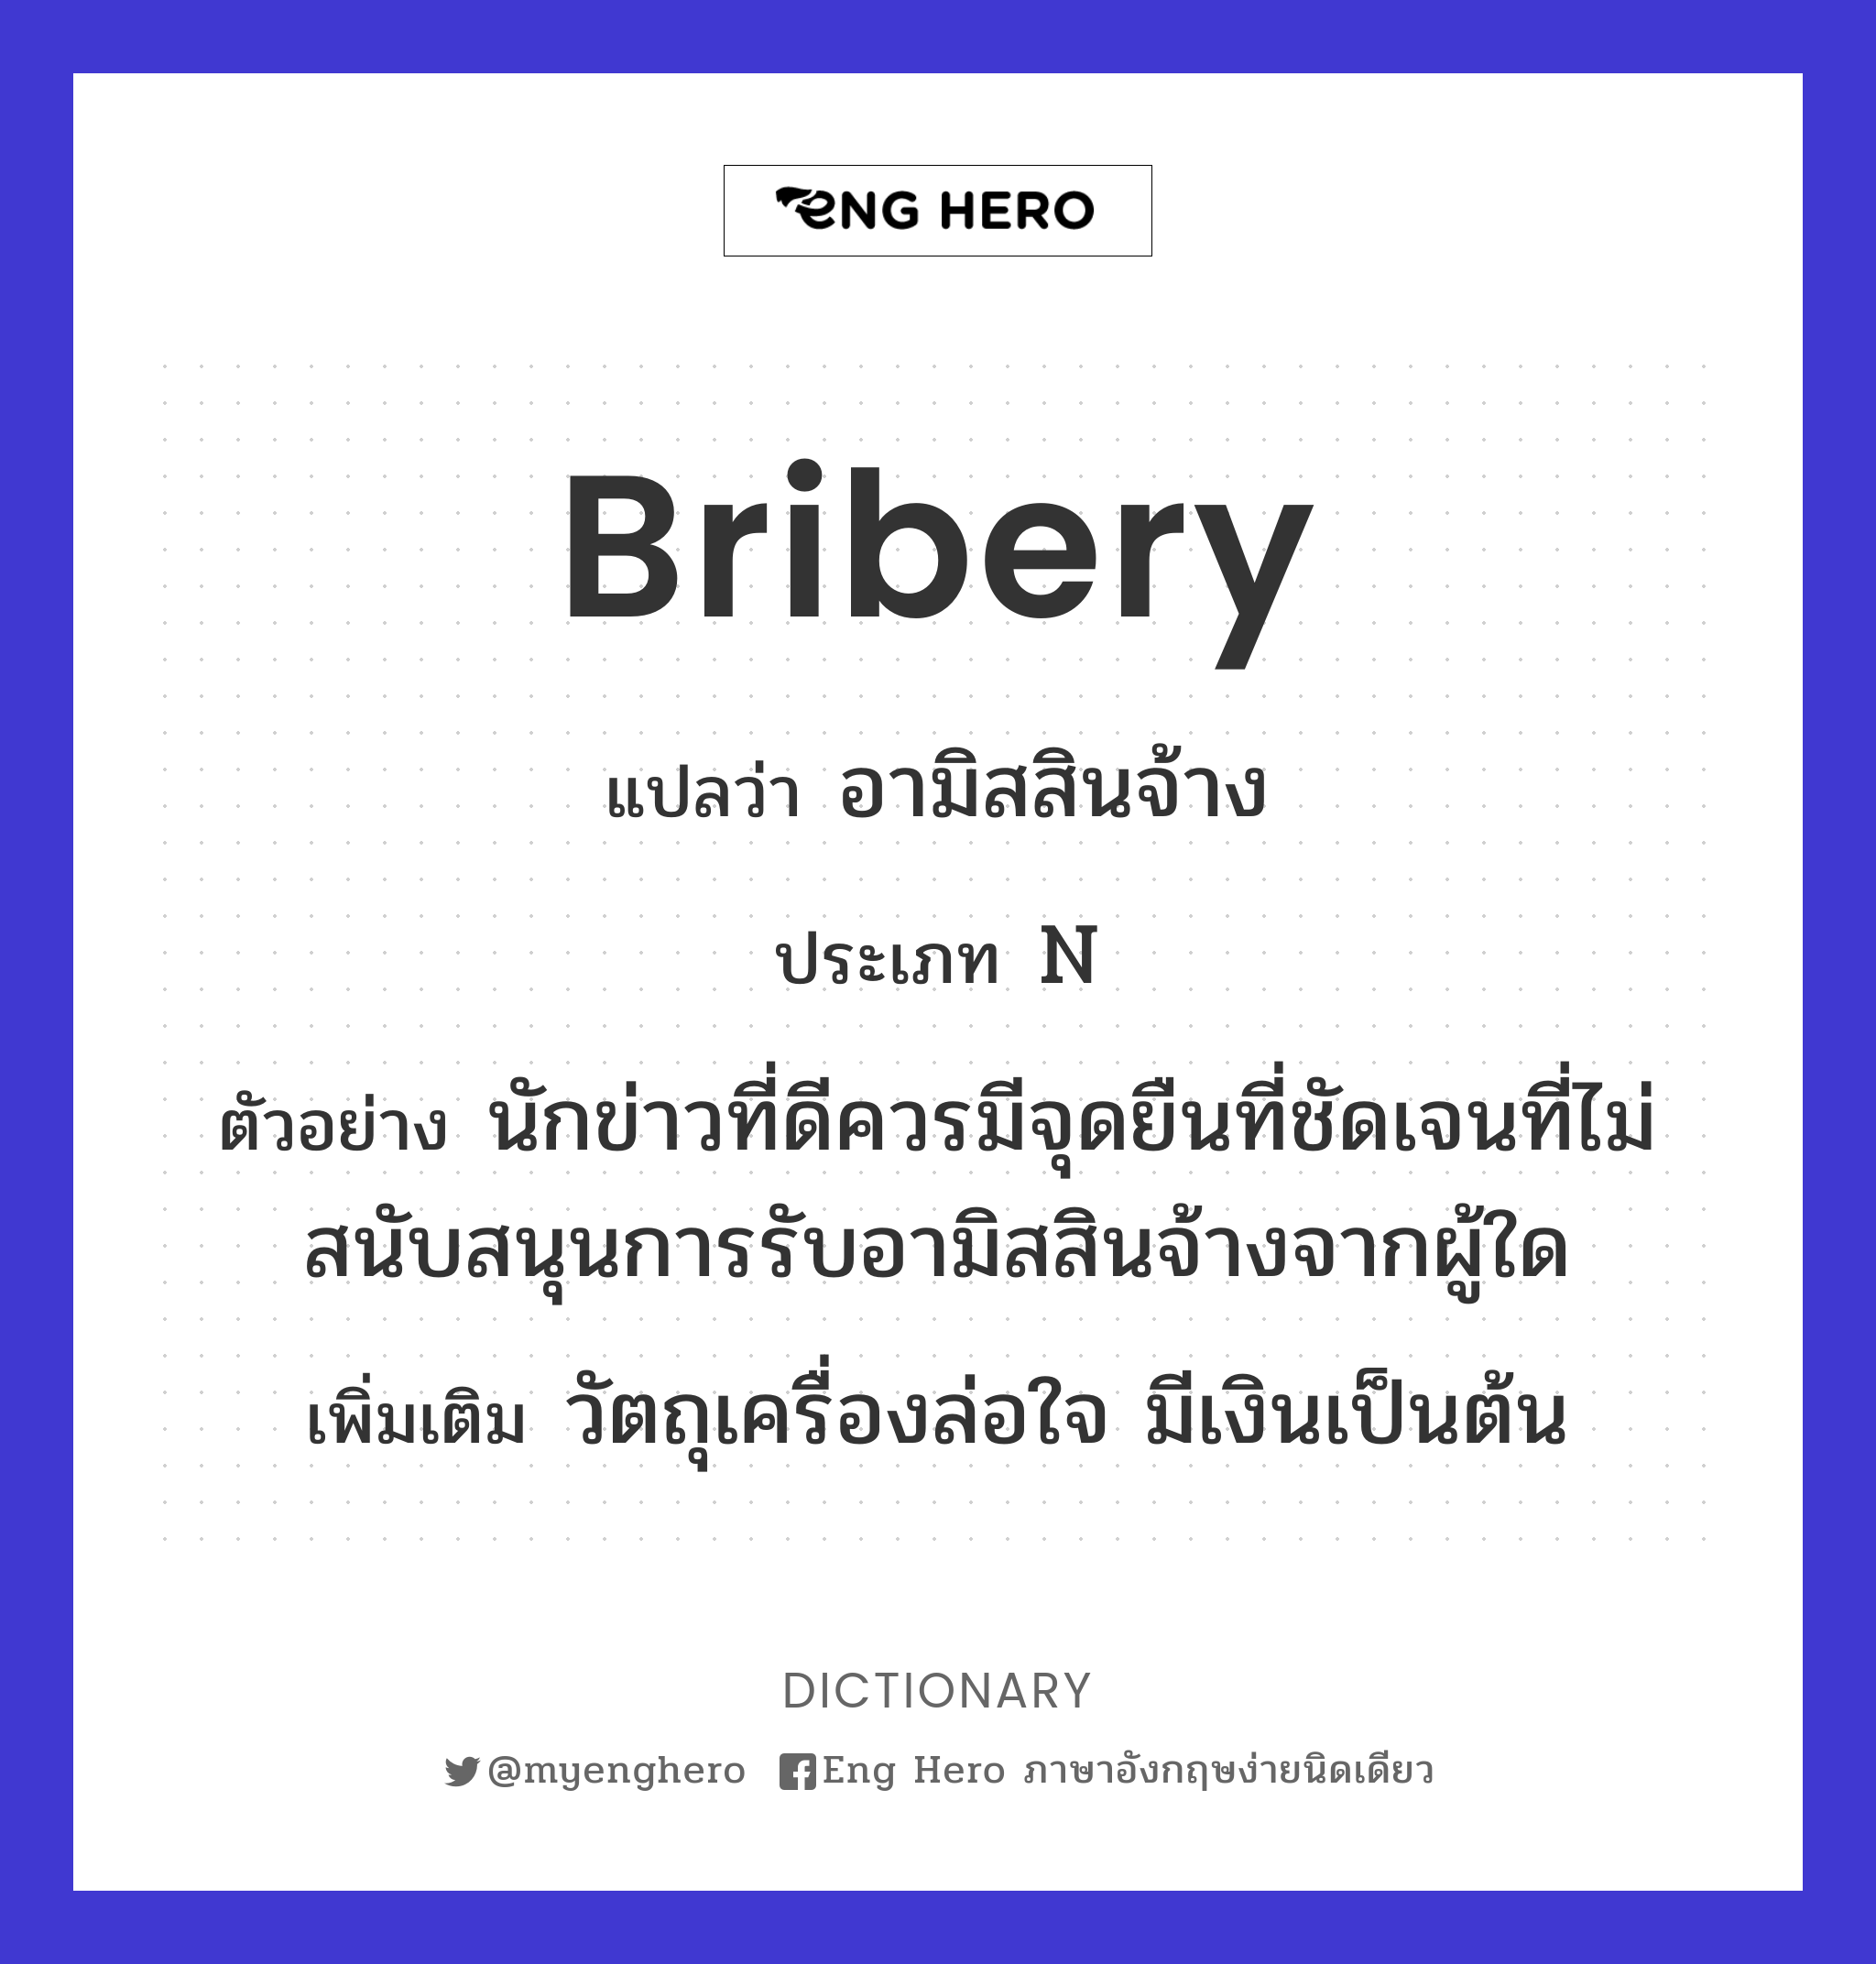 bribery